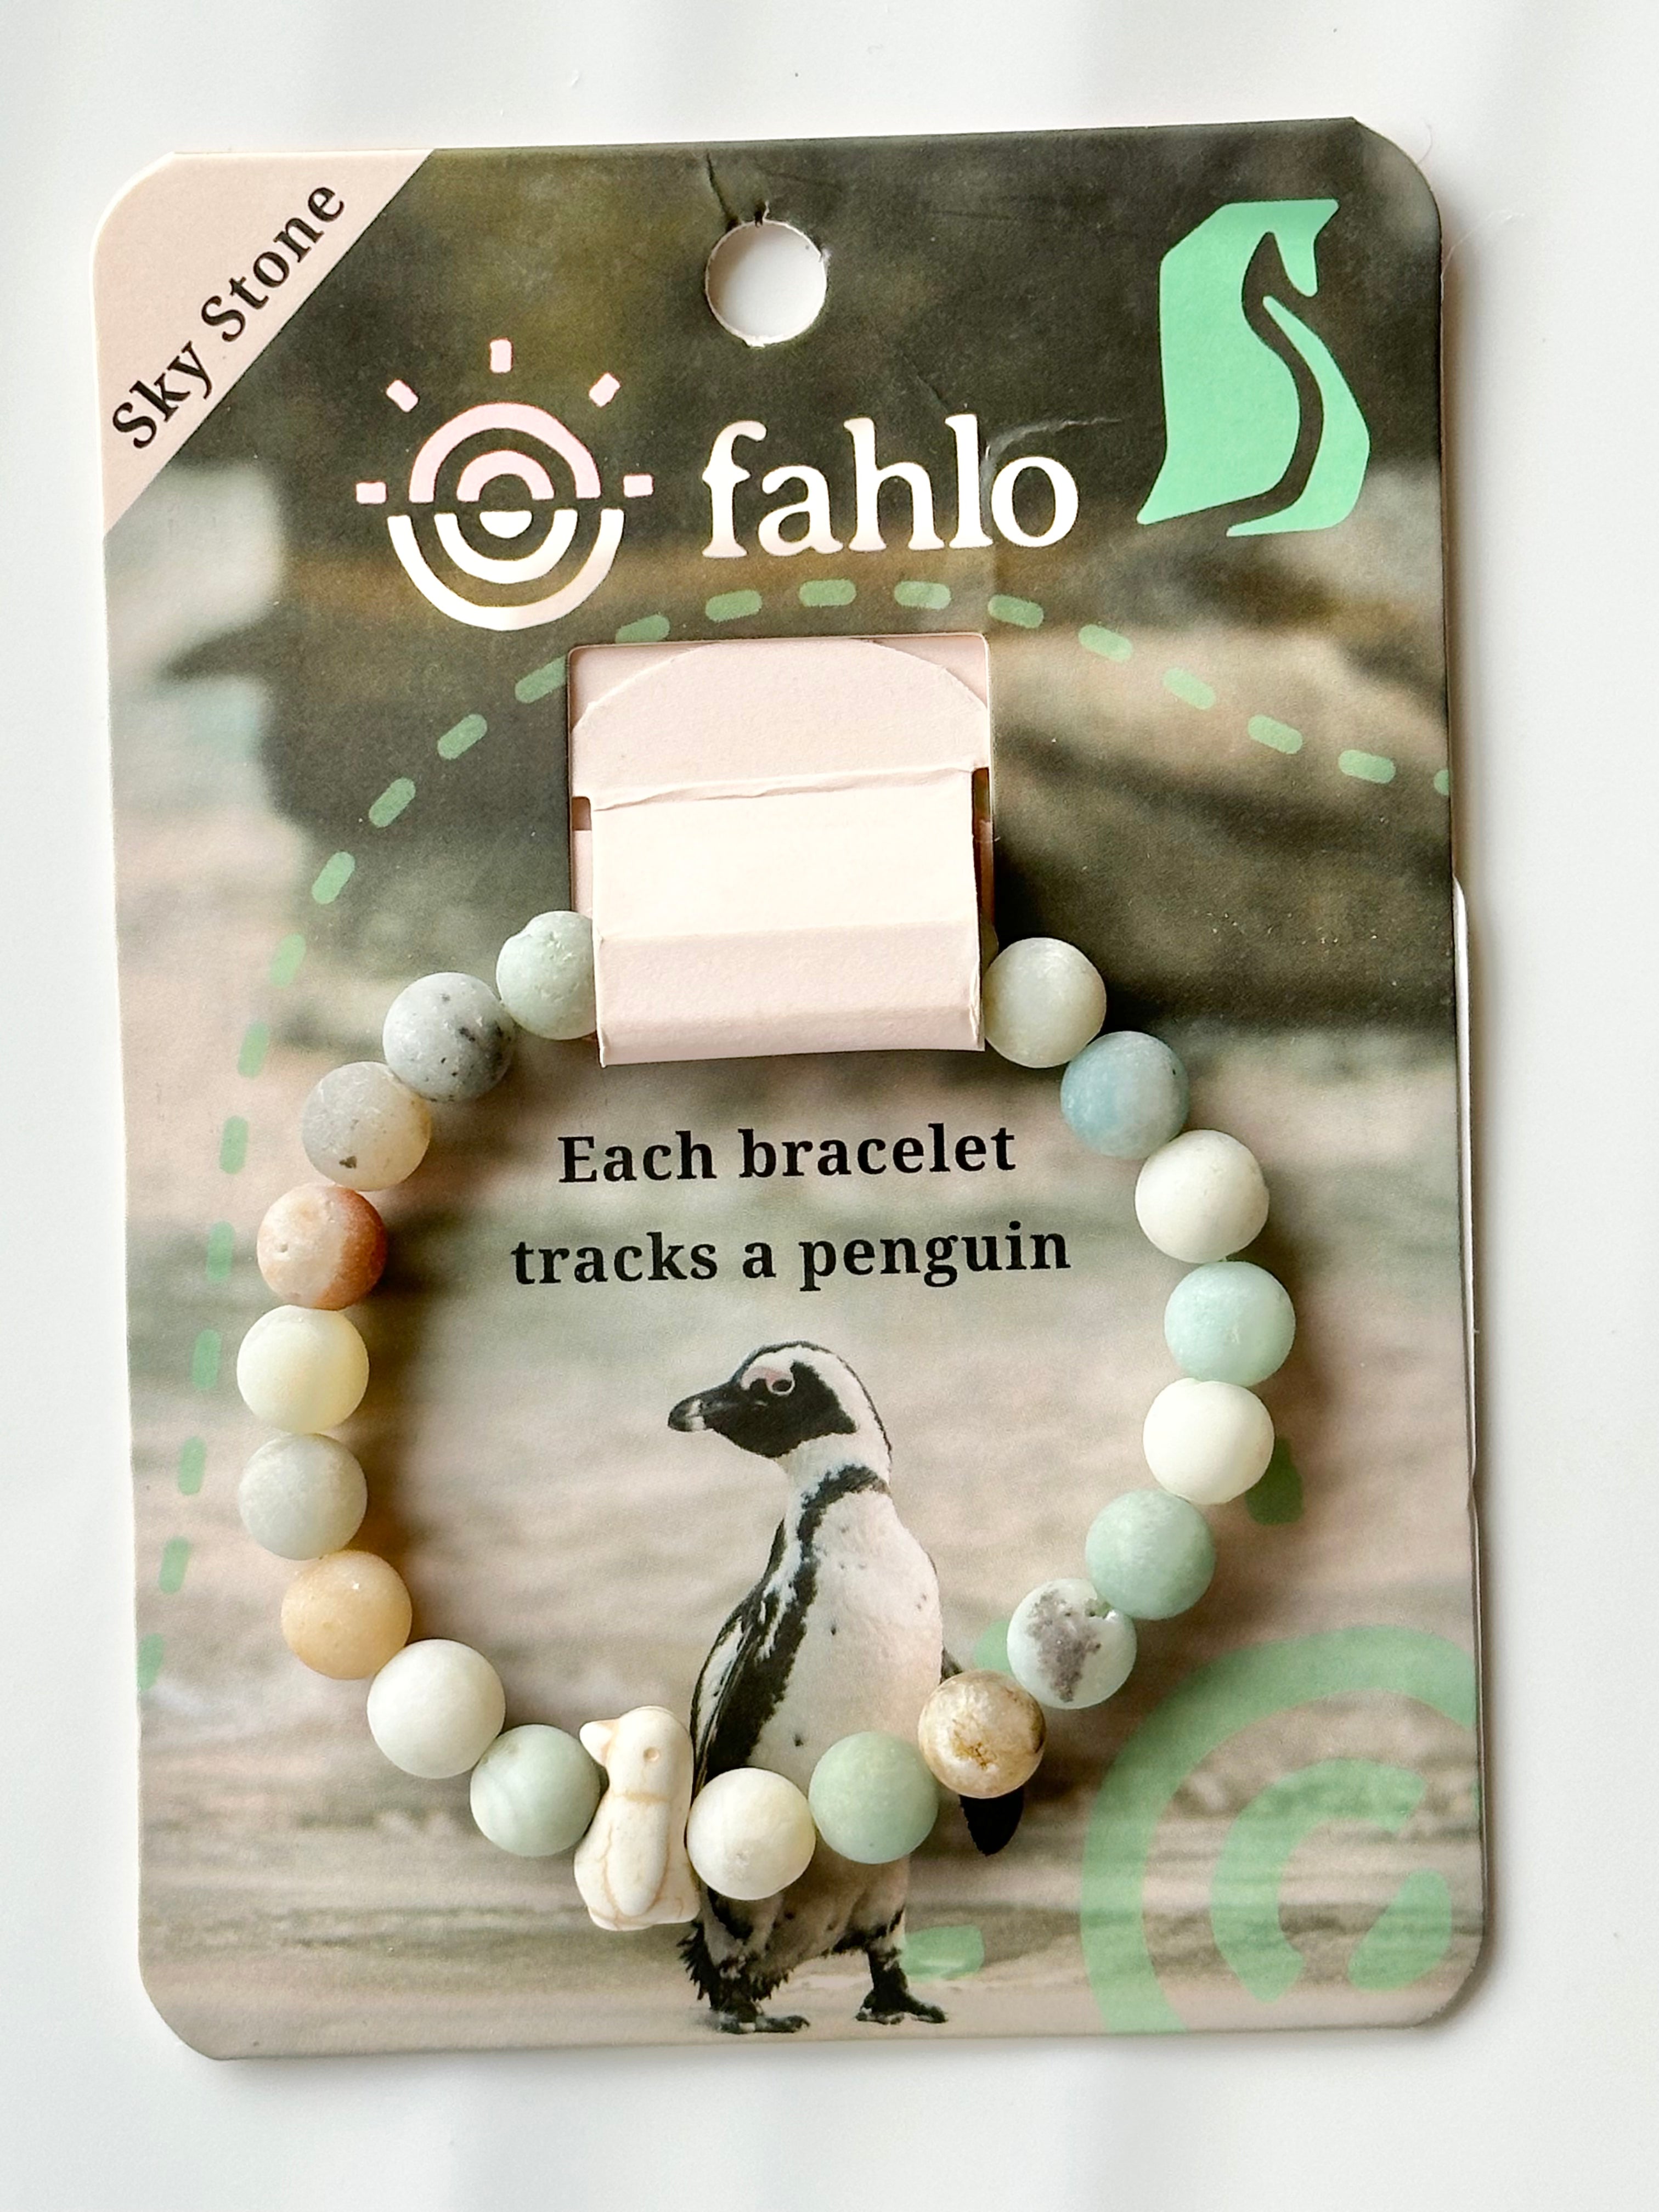 Penguin Tracker Bracelet PASSAGE-Sky Stone